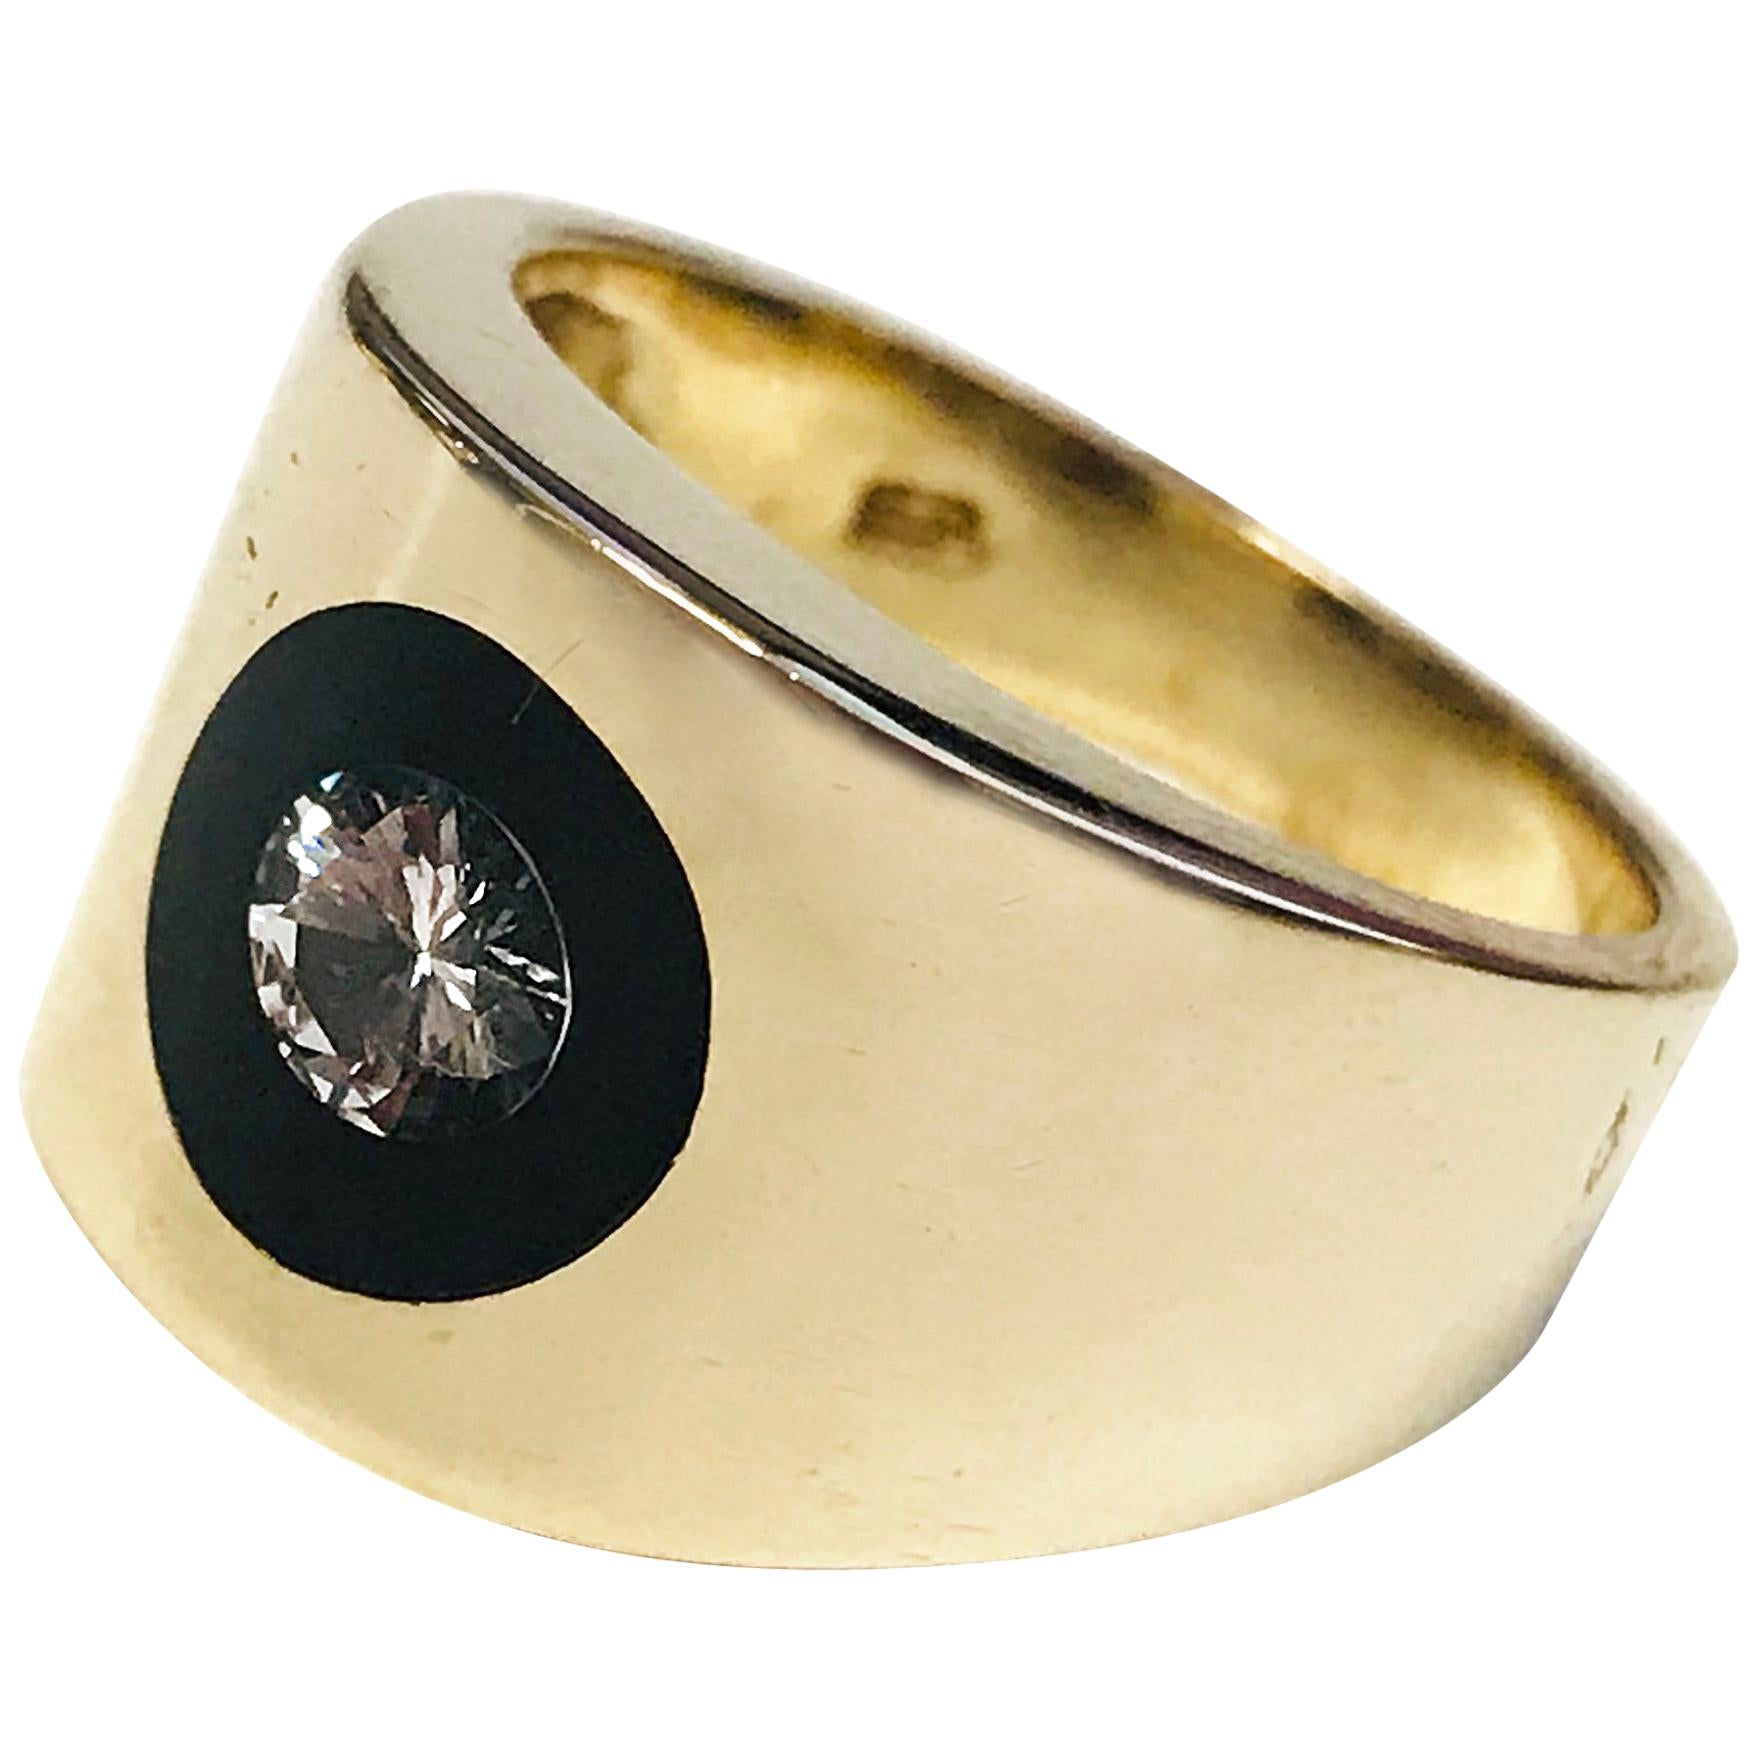 Incogem Floating Diamond Lucite Ring - 0.35ct - Size 6.75